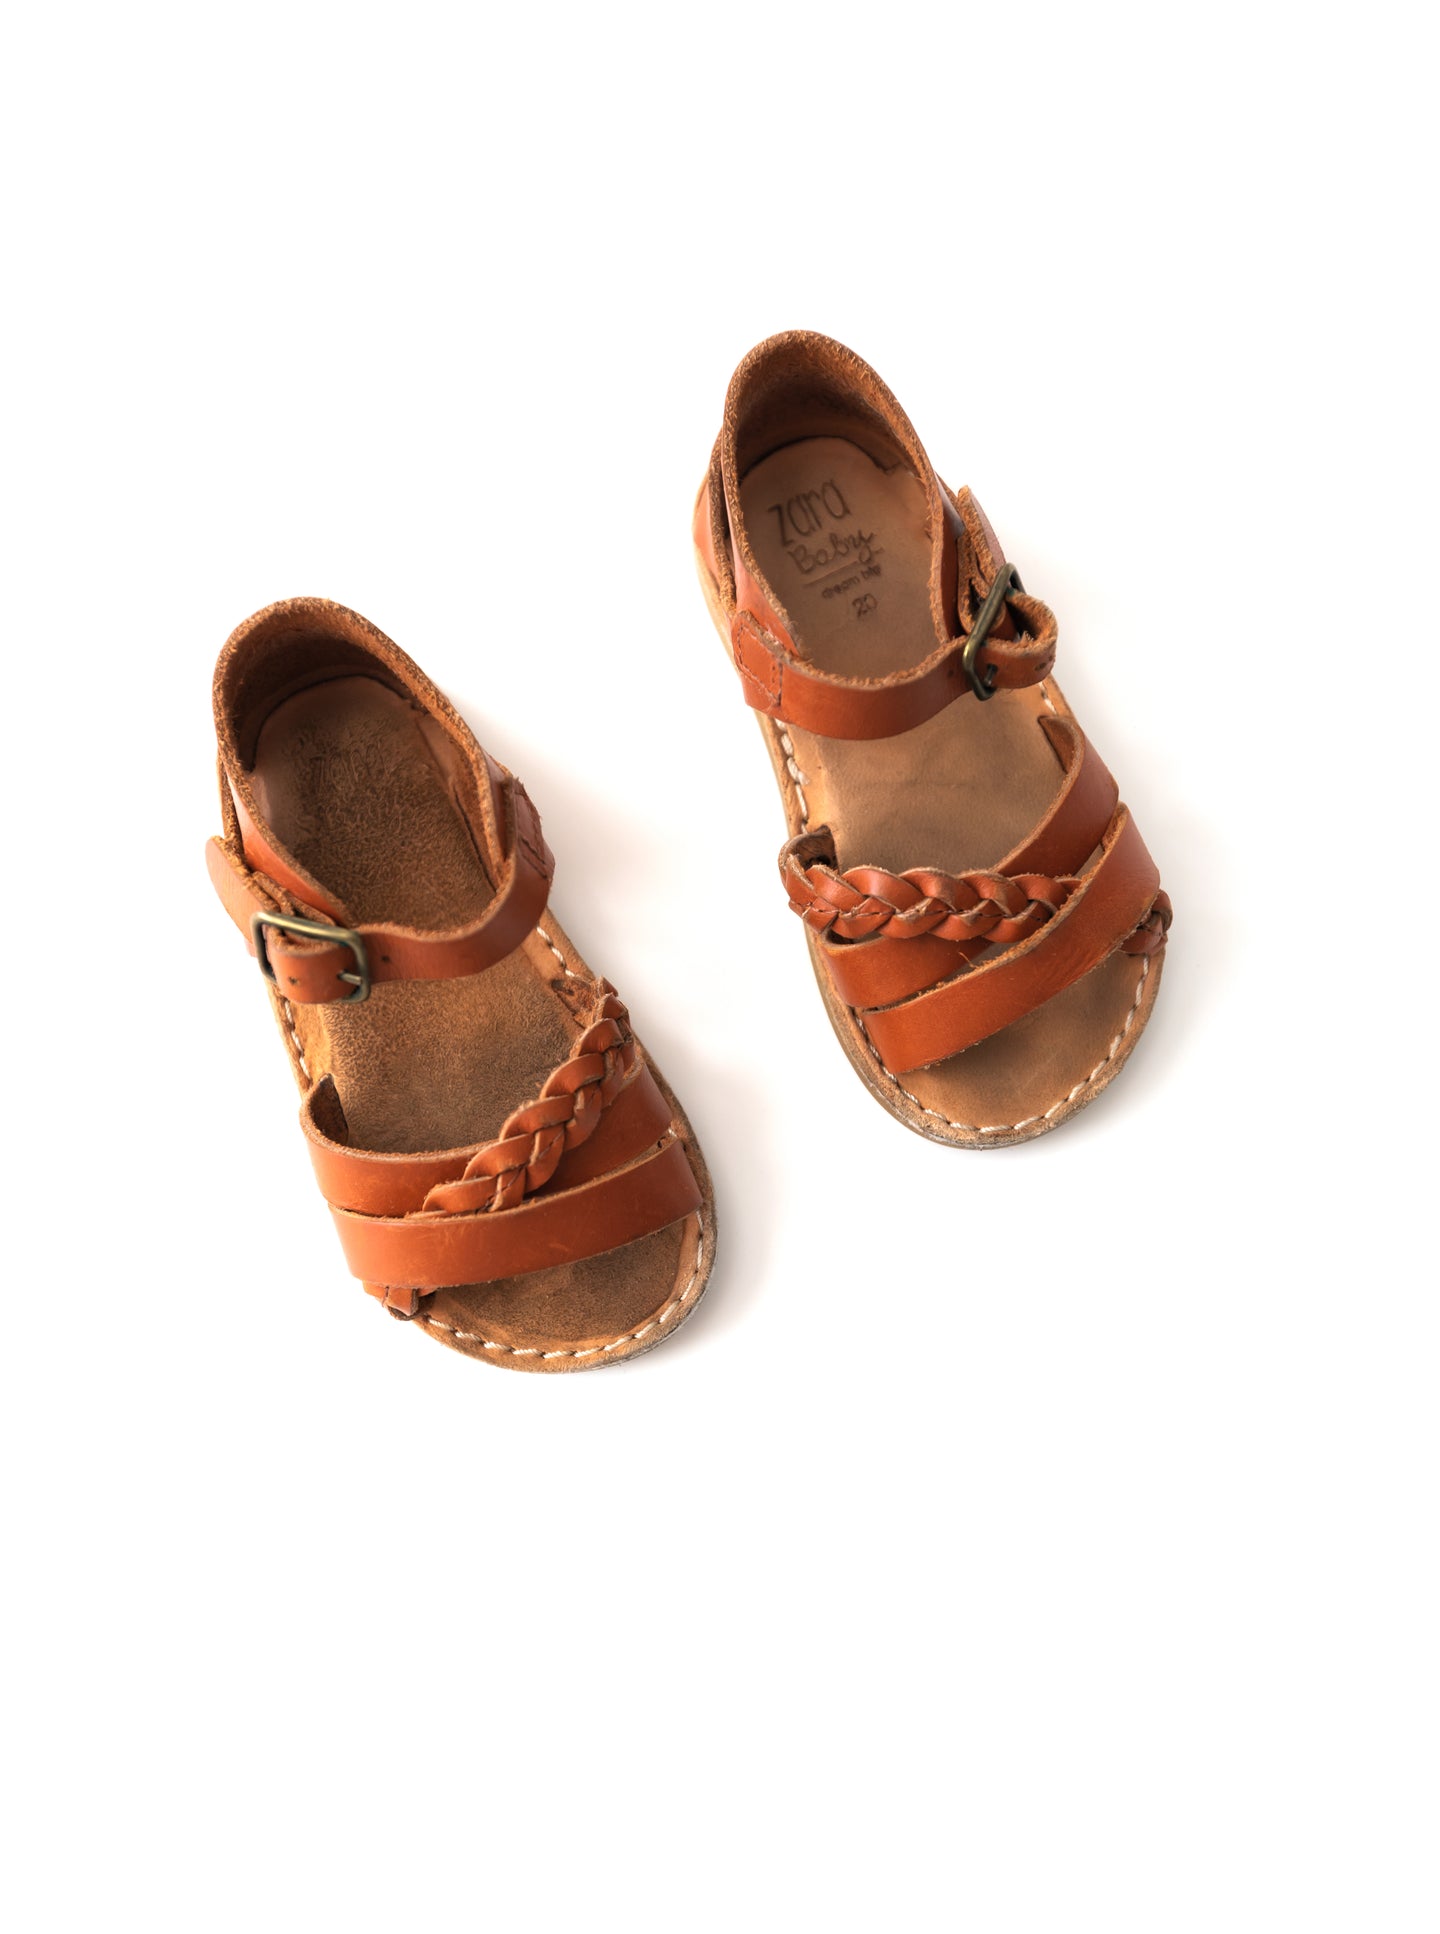 [EU20] Zara Baby Leather Casual Sandals w/Buckle